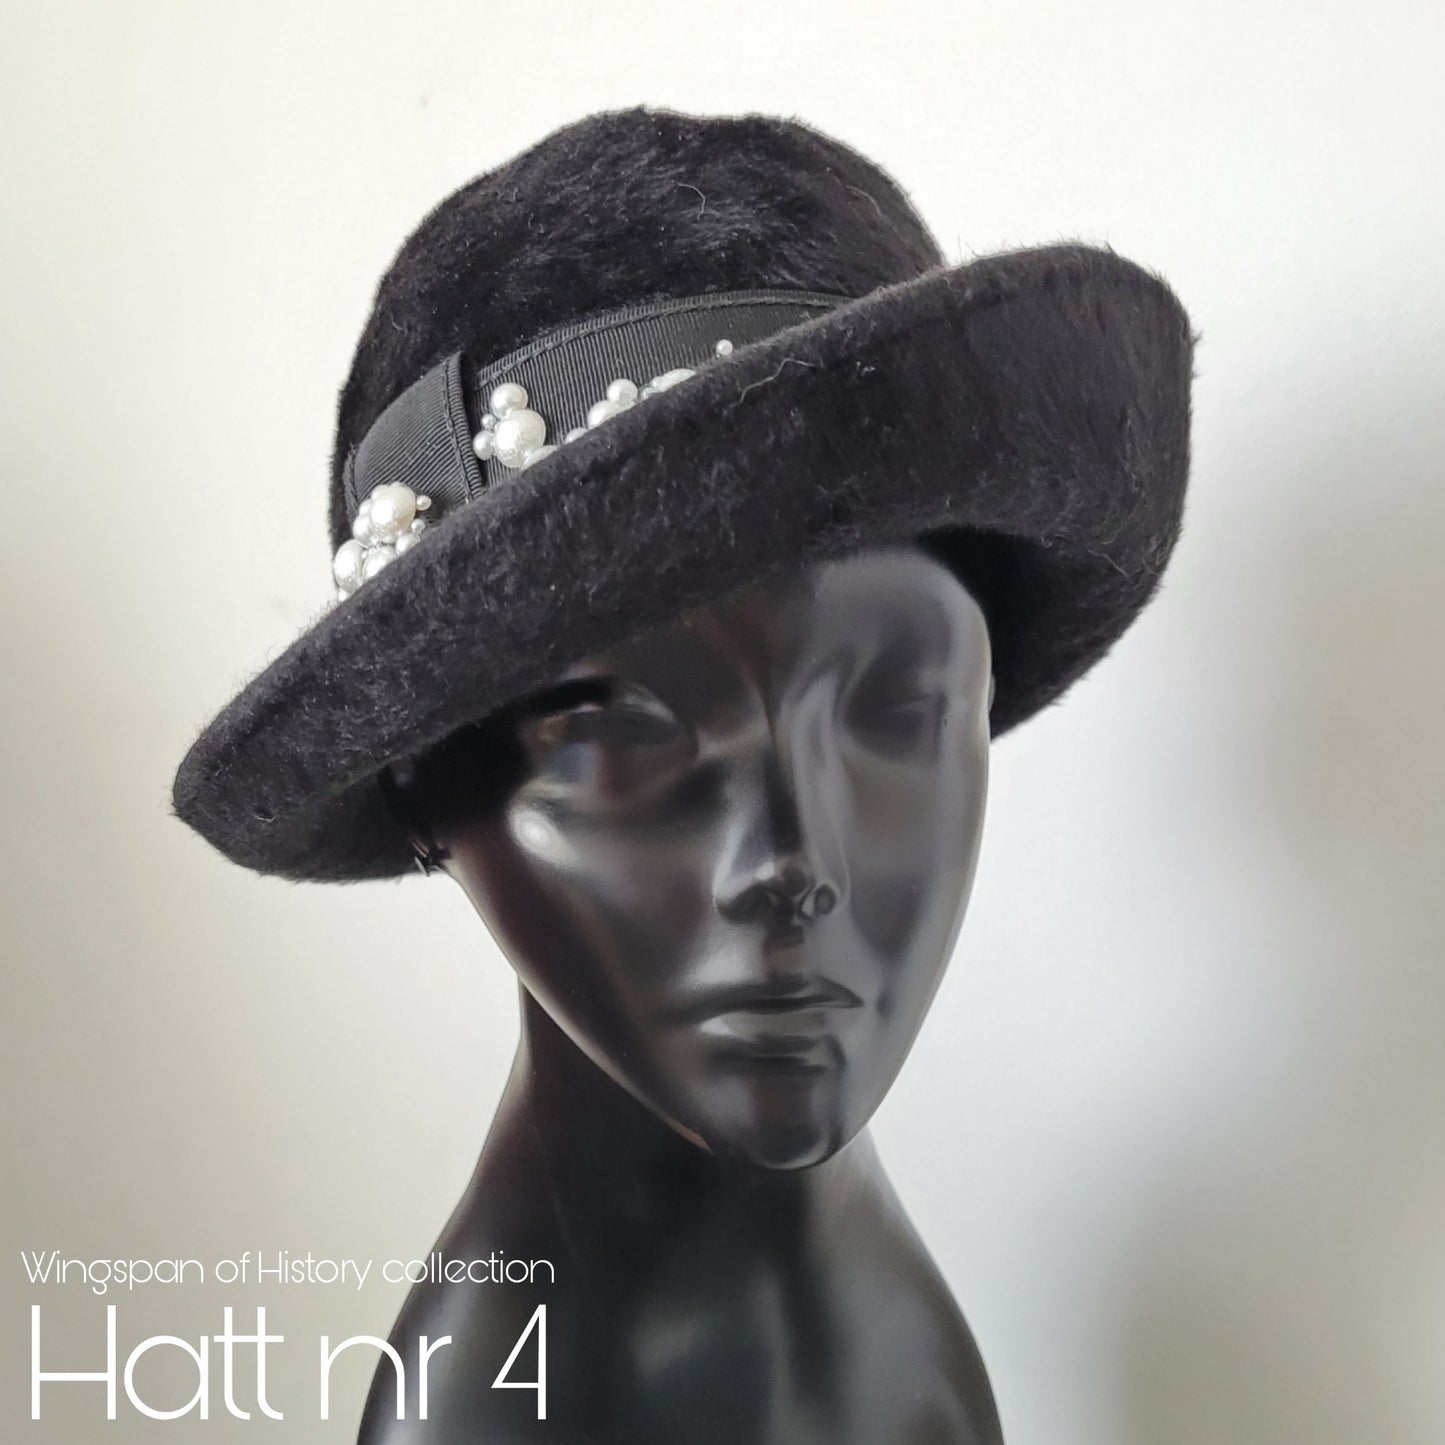 Wingspan of History collection: Hatt nr 4